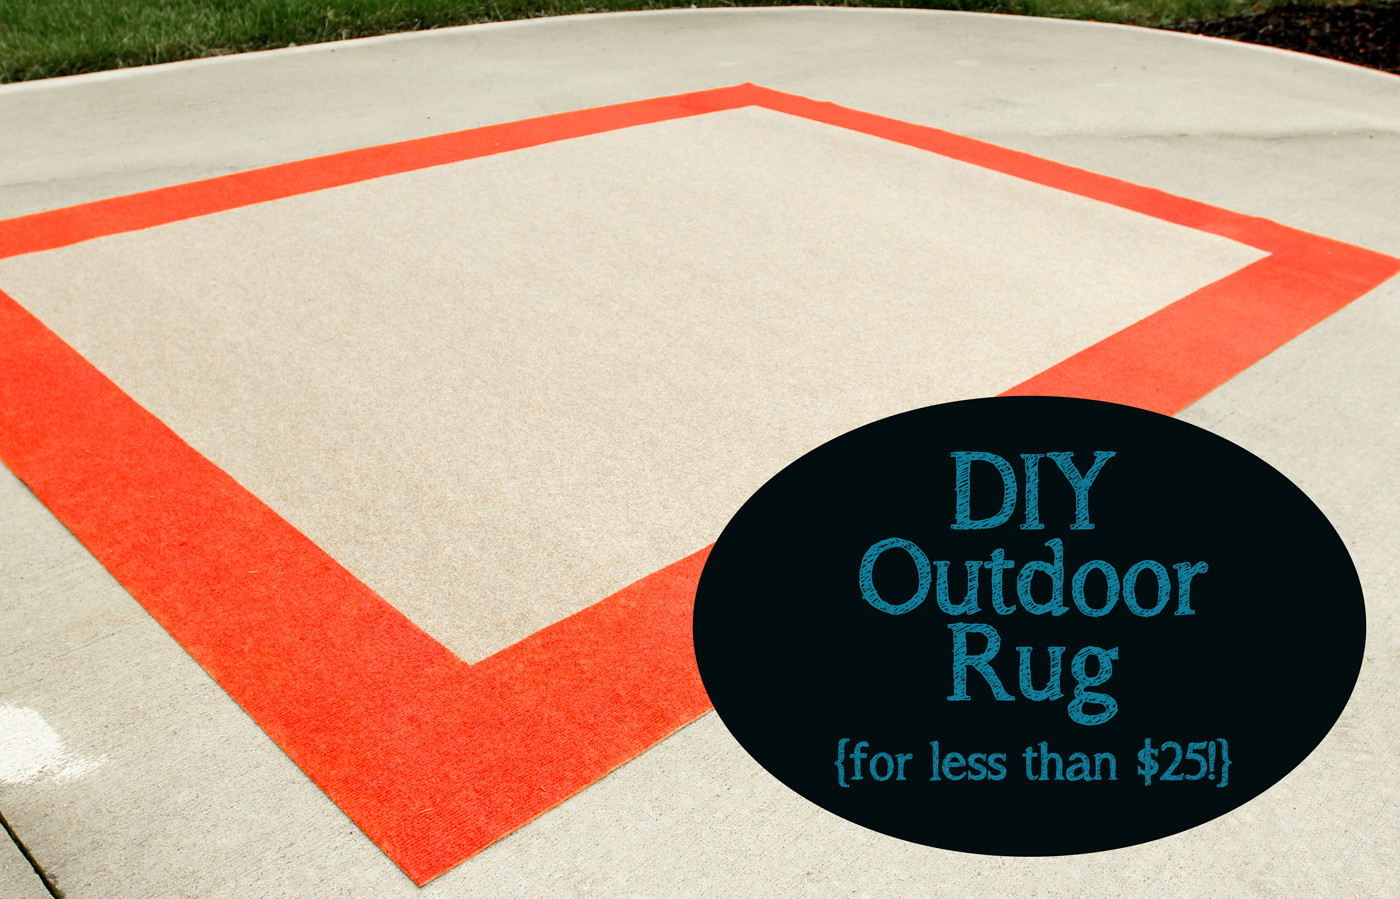 DIY Outdoor Rug
 DIY Outdoor Rug for Less Than $25